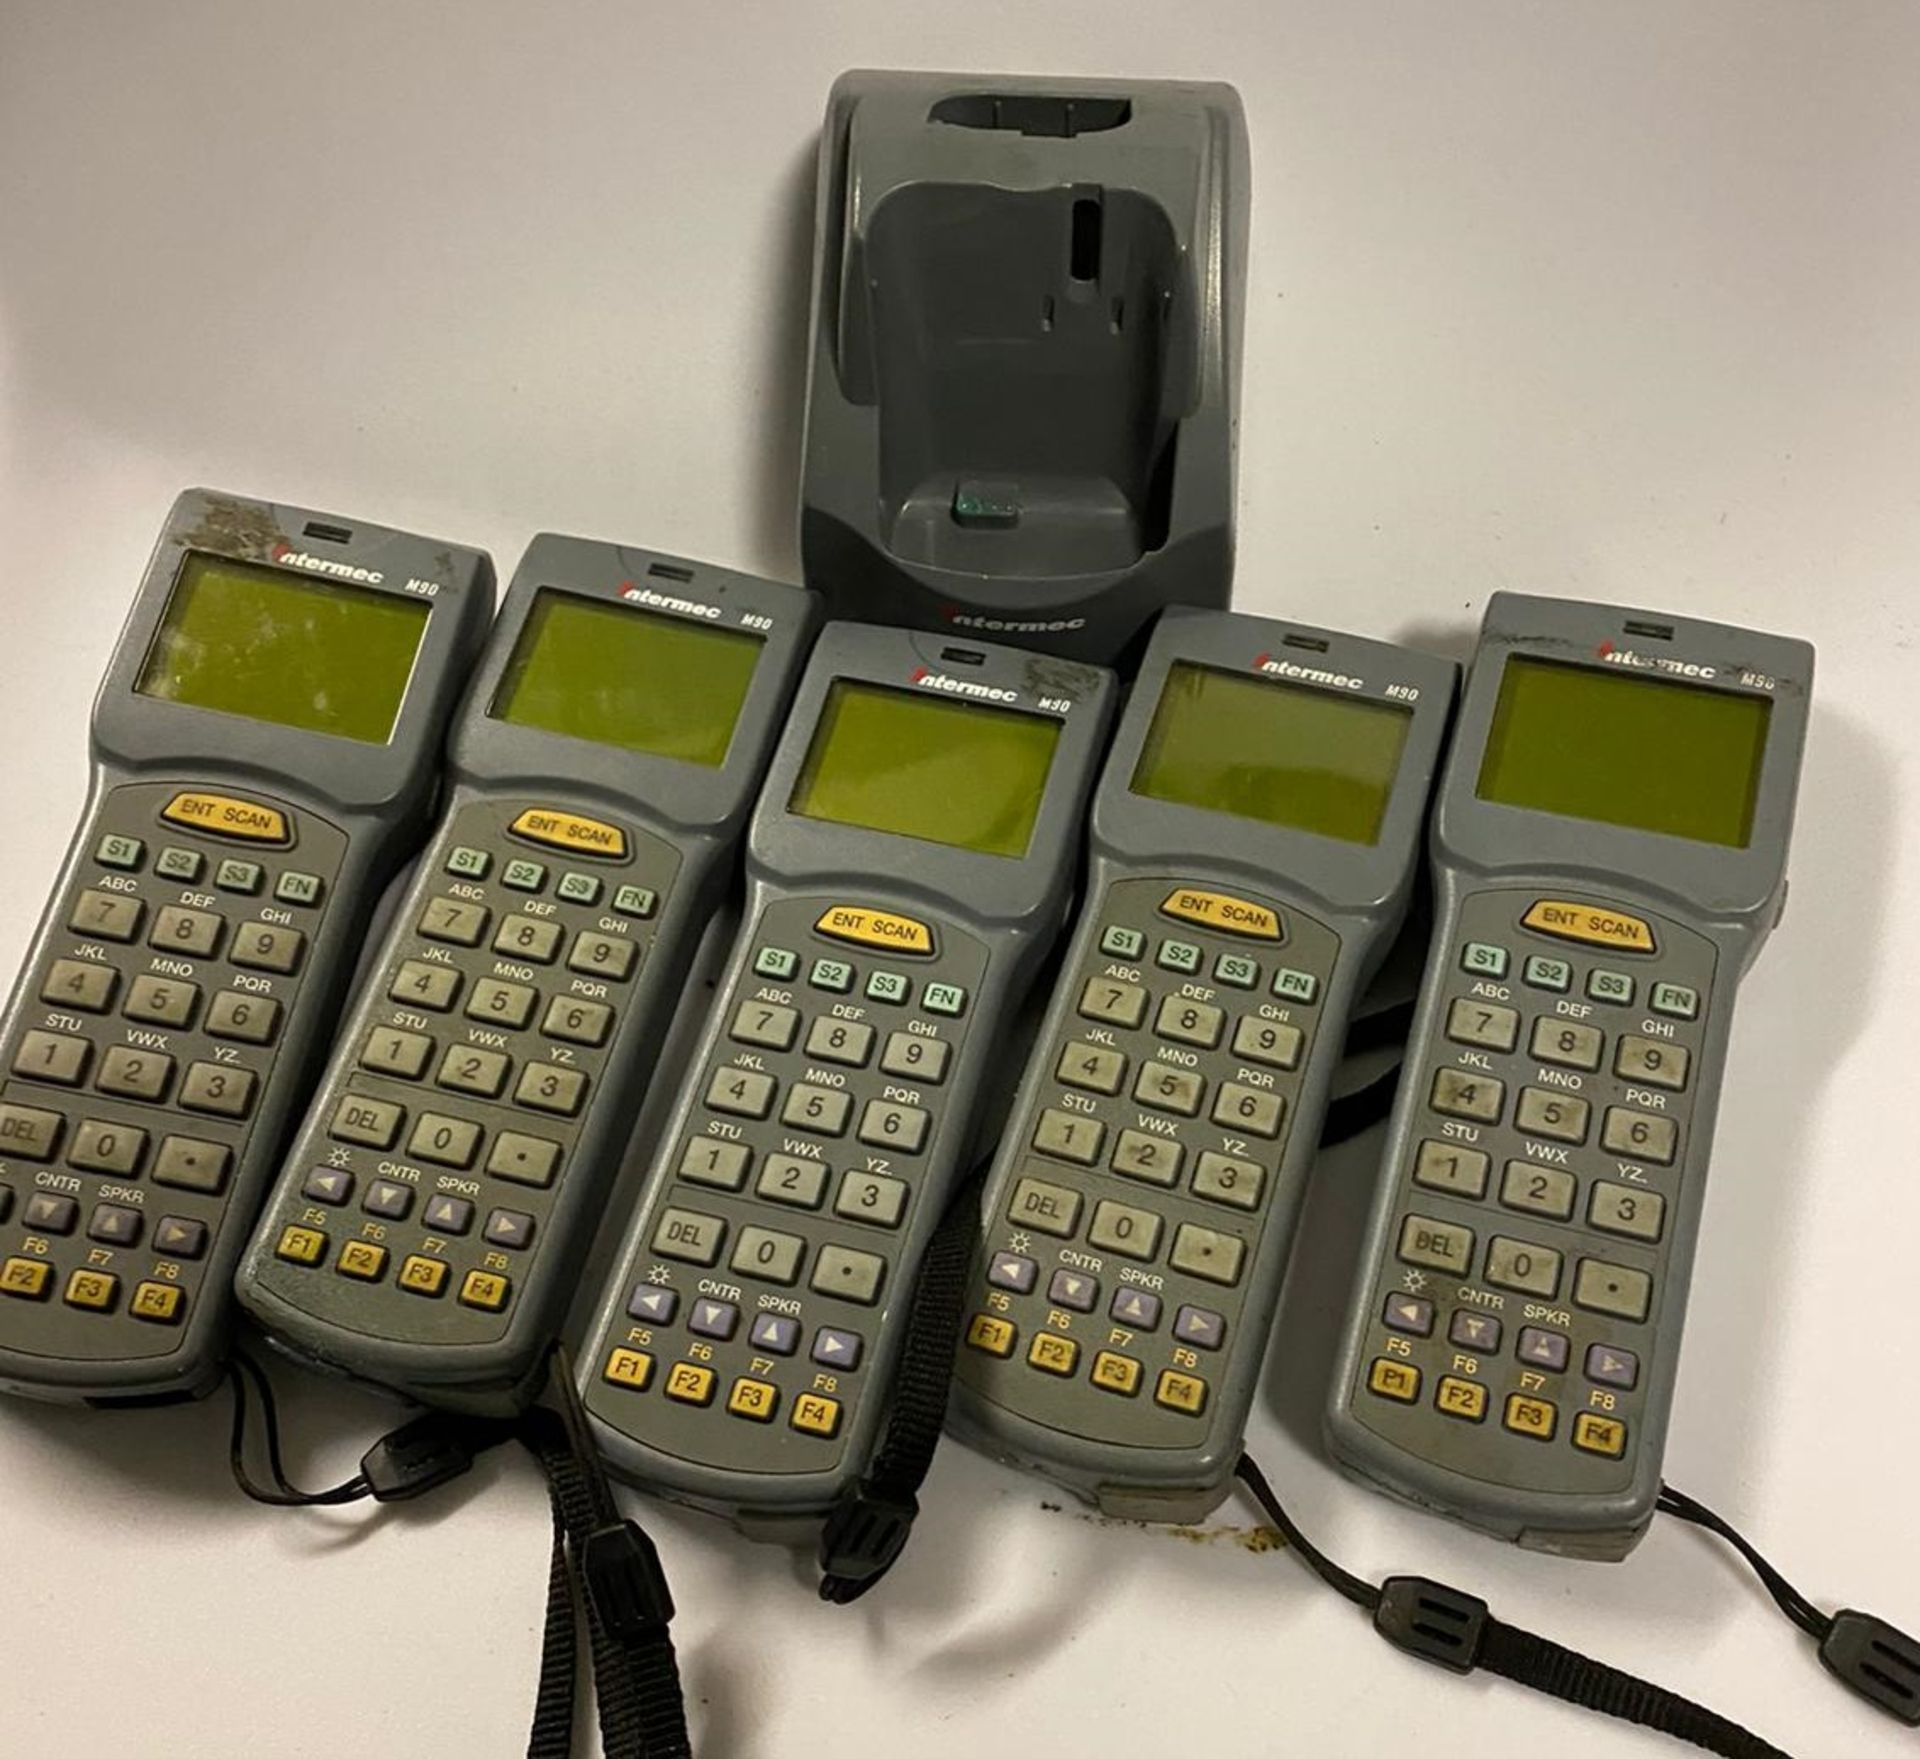 2 x Intermec M90 Portable Barcode Scanner - Used Condition - Location: Altrincham WA14 - - Image 3 of 8